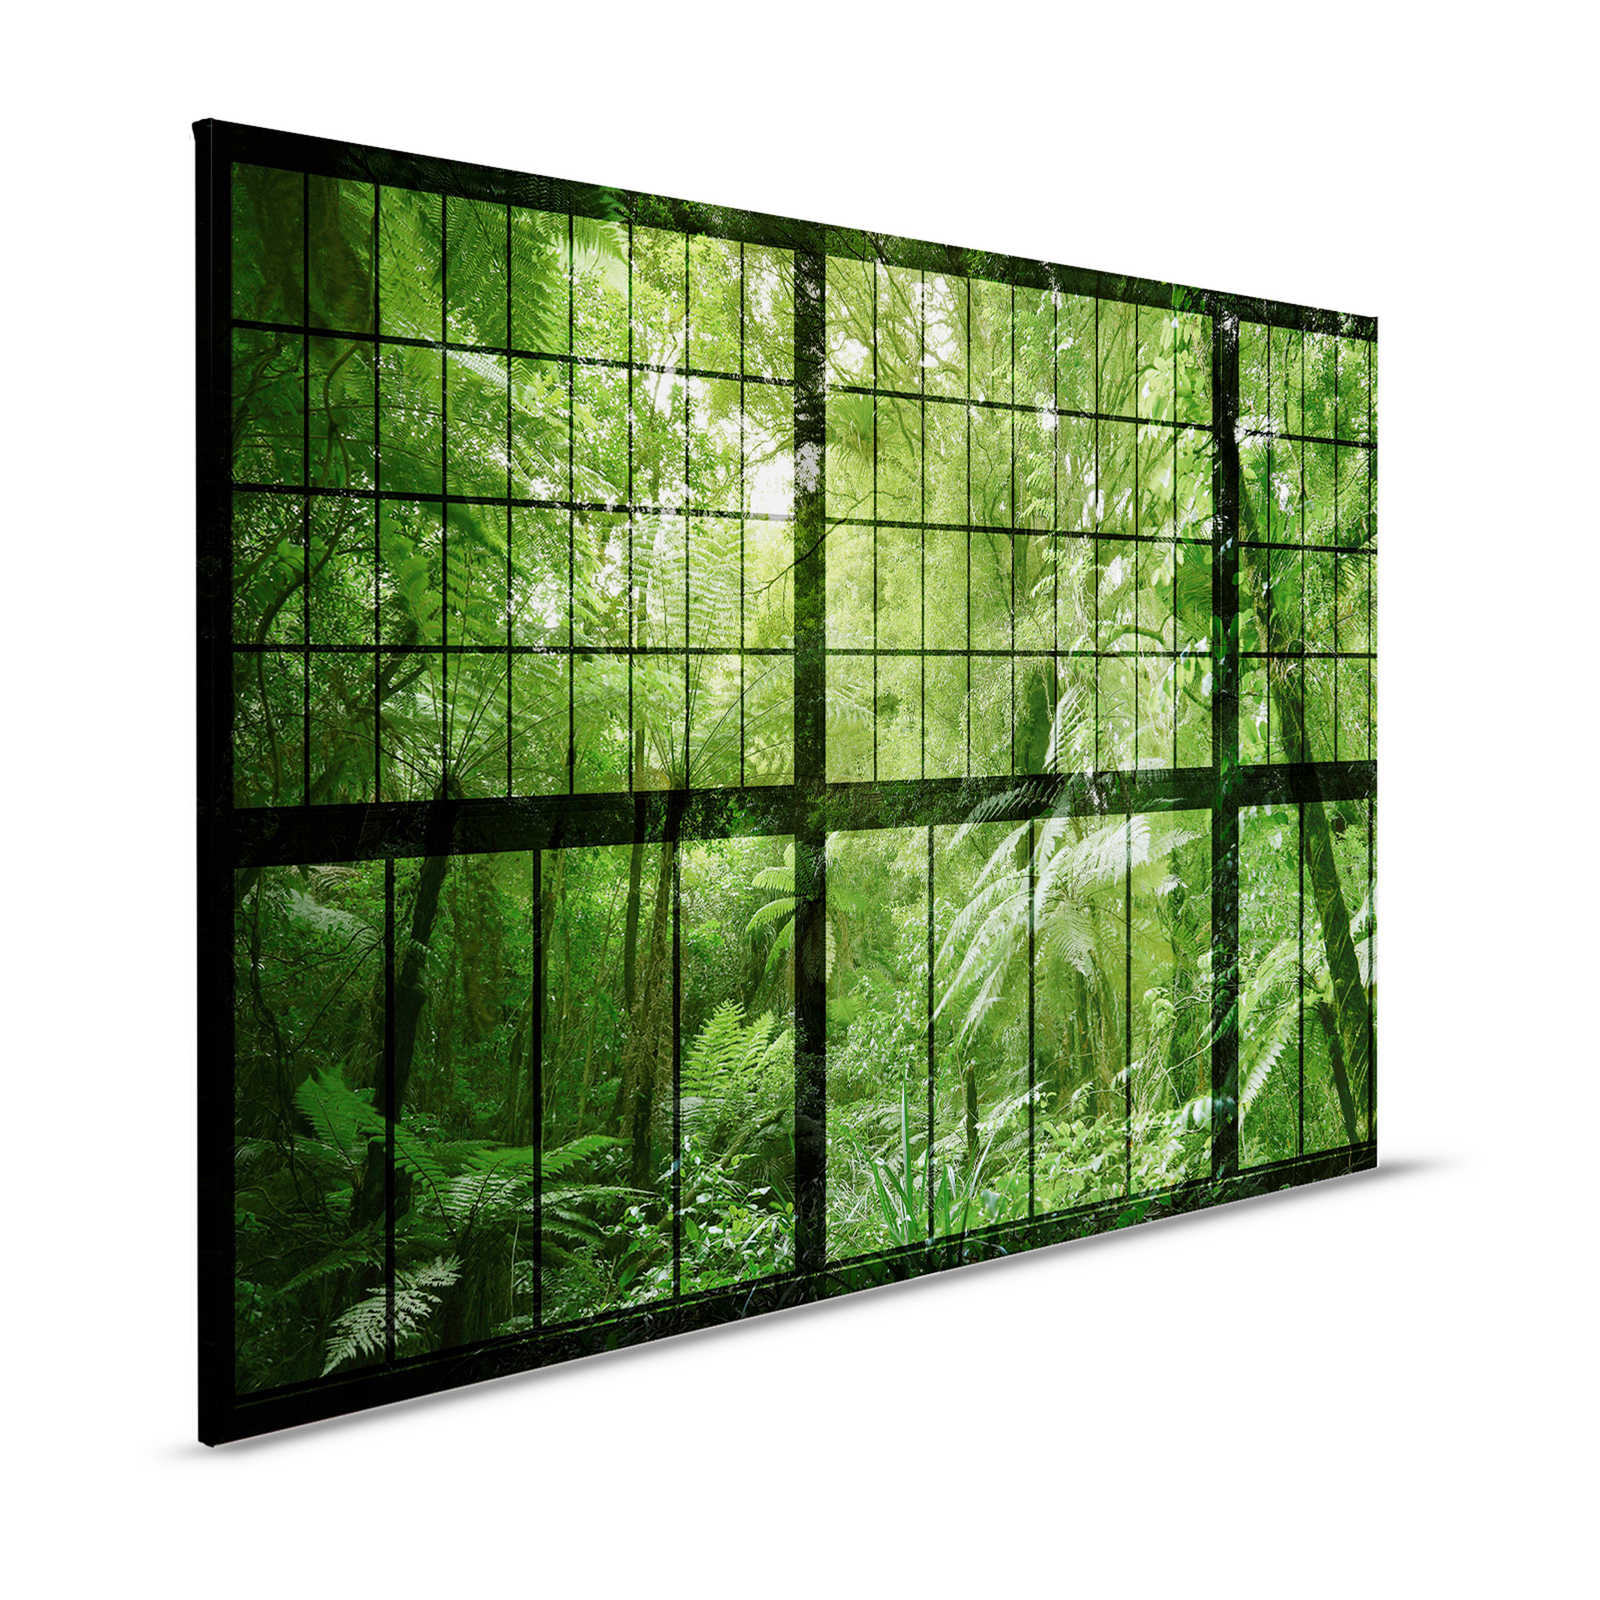 Rainforest 2 - Loftfenster Leinwandbild mit Dschungel Aussicht – 1,20 m x 0,80 m
